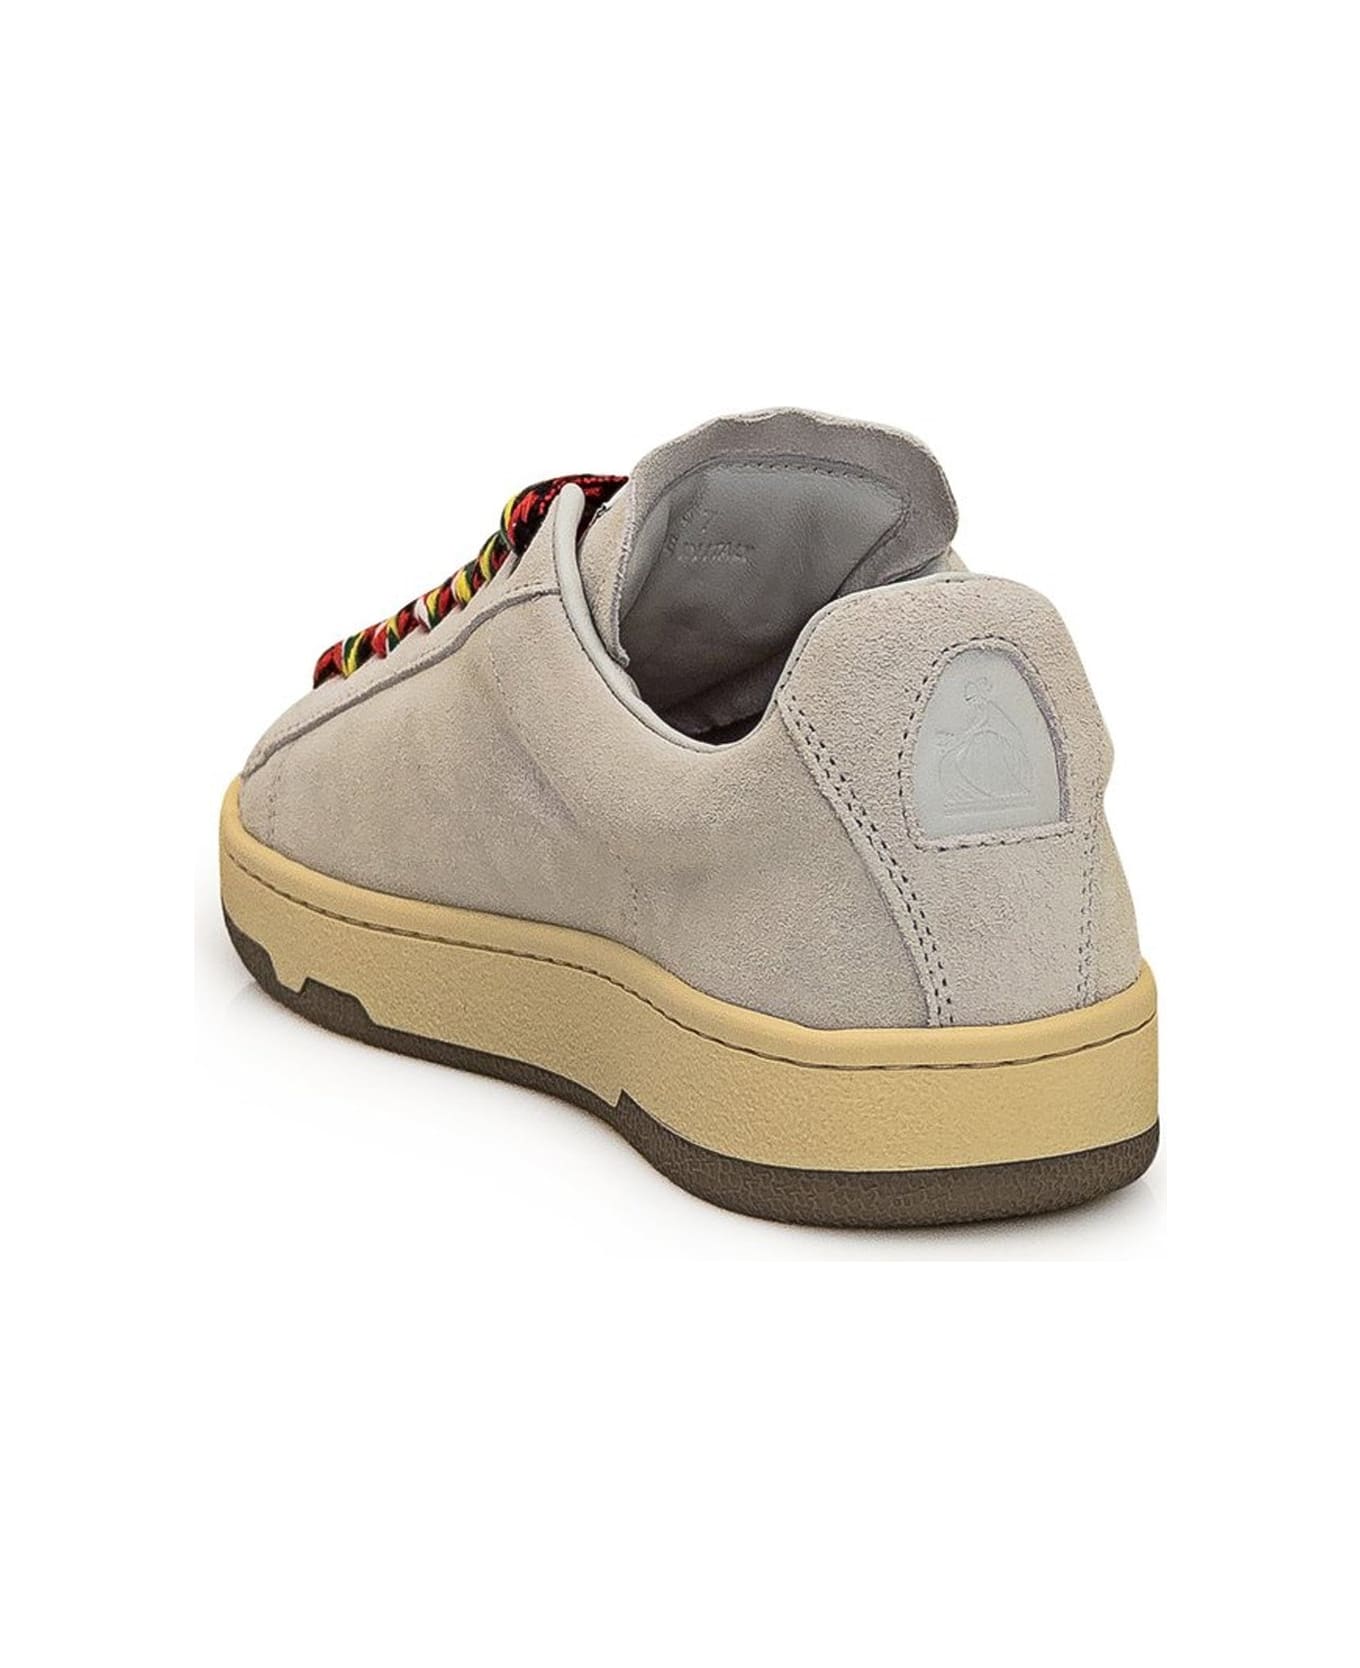 Lanvin Curb Sneakers - Gray